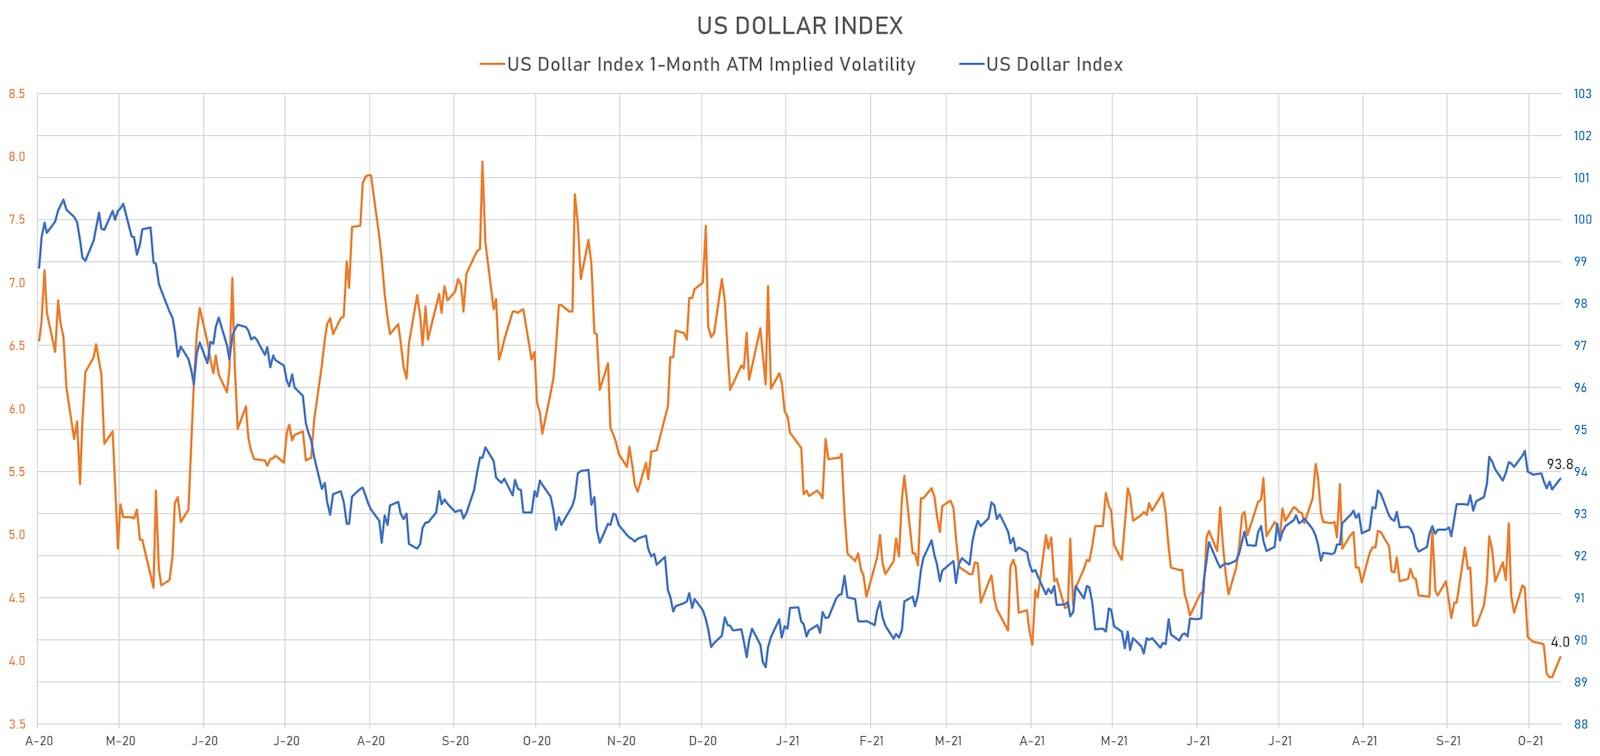 US Dollar Index & DX Options 1-Month ATM Implied Volatility | Sources: ϕpost, Refinitiv data